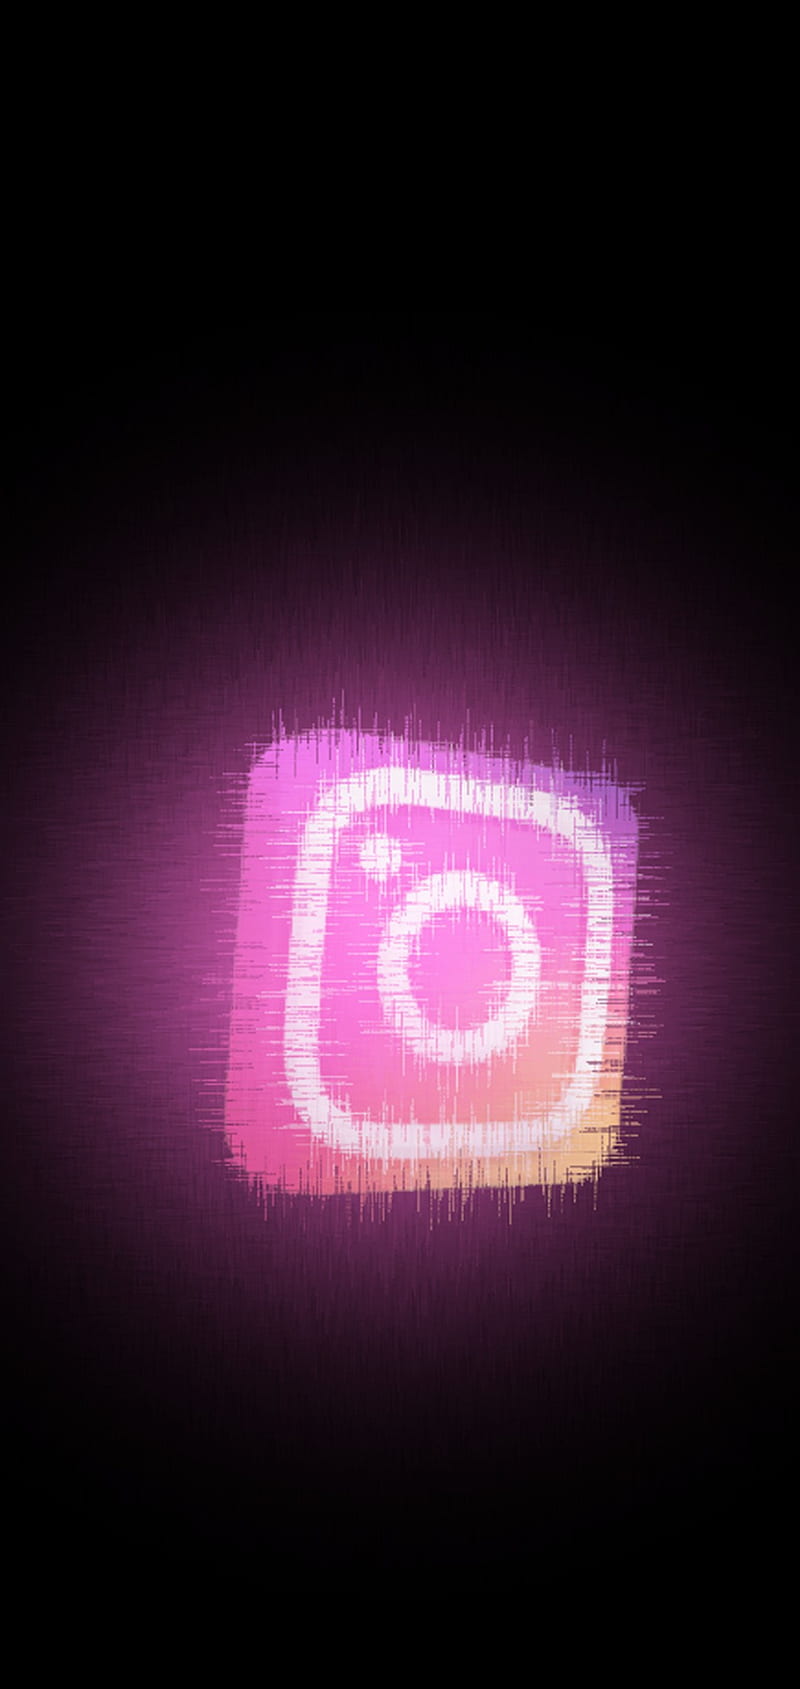 instagram logo color